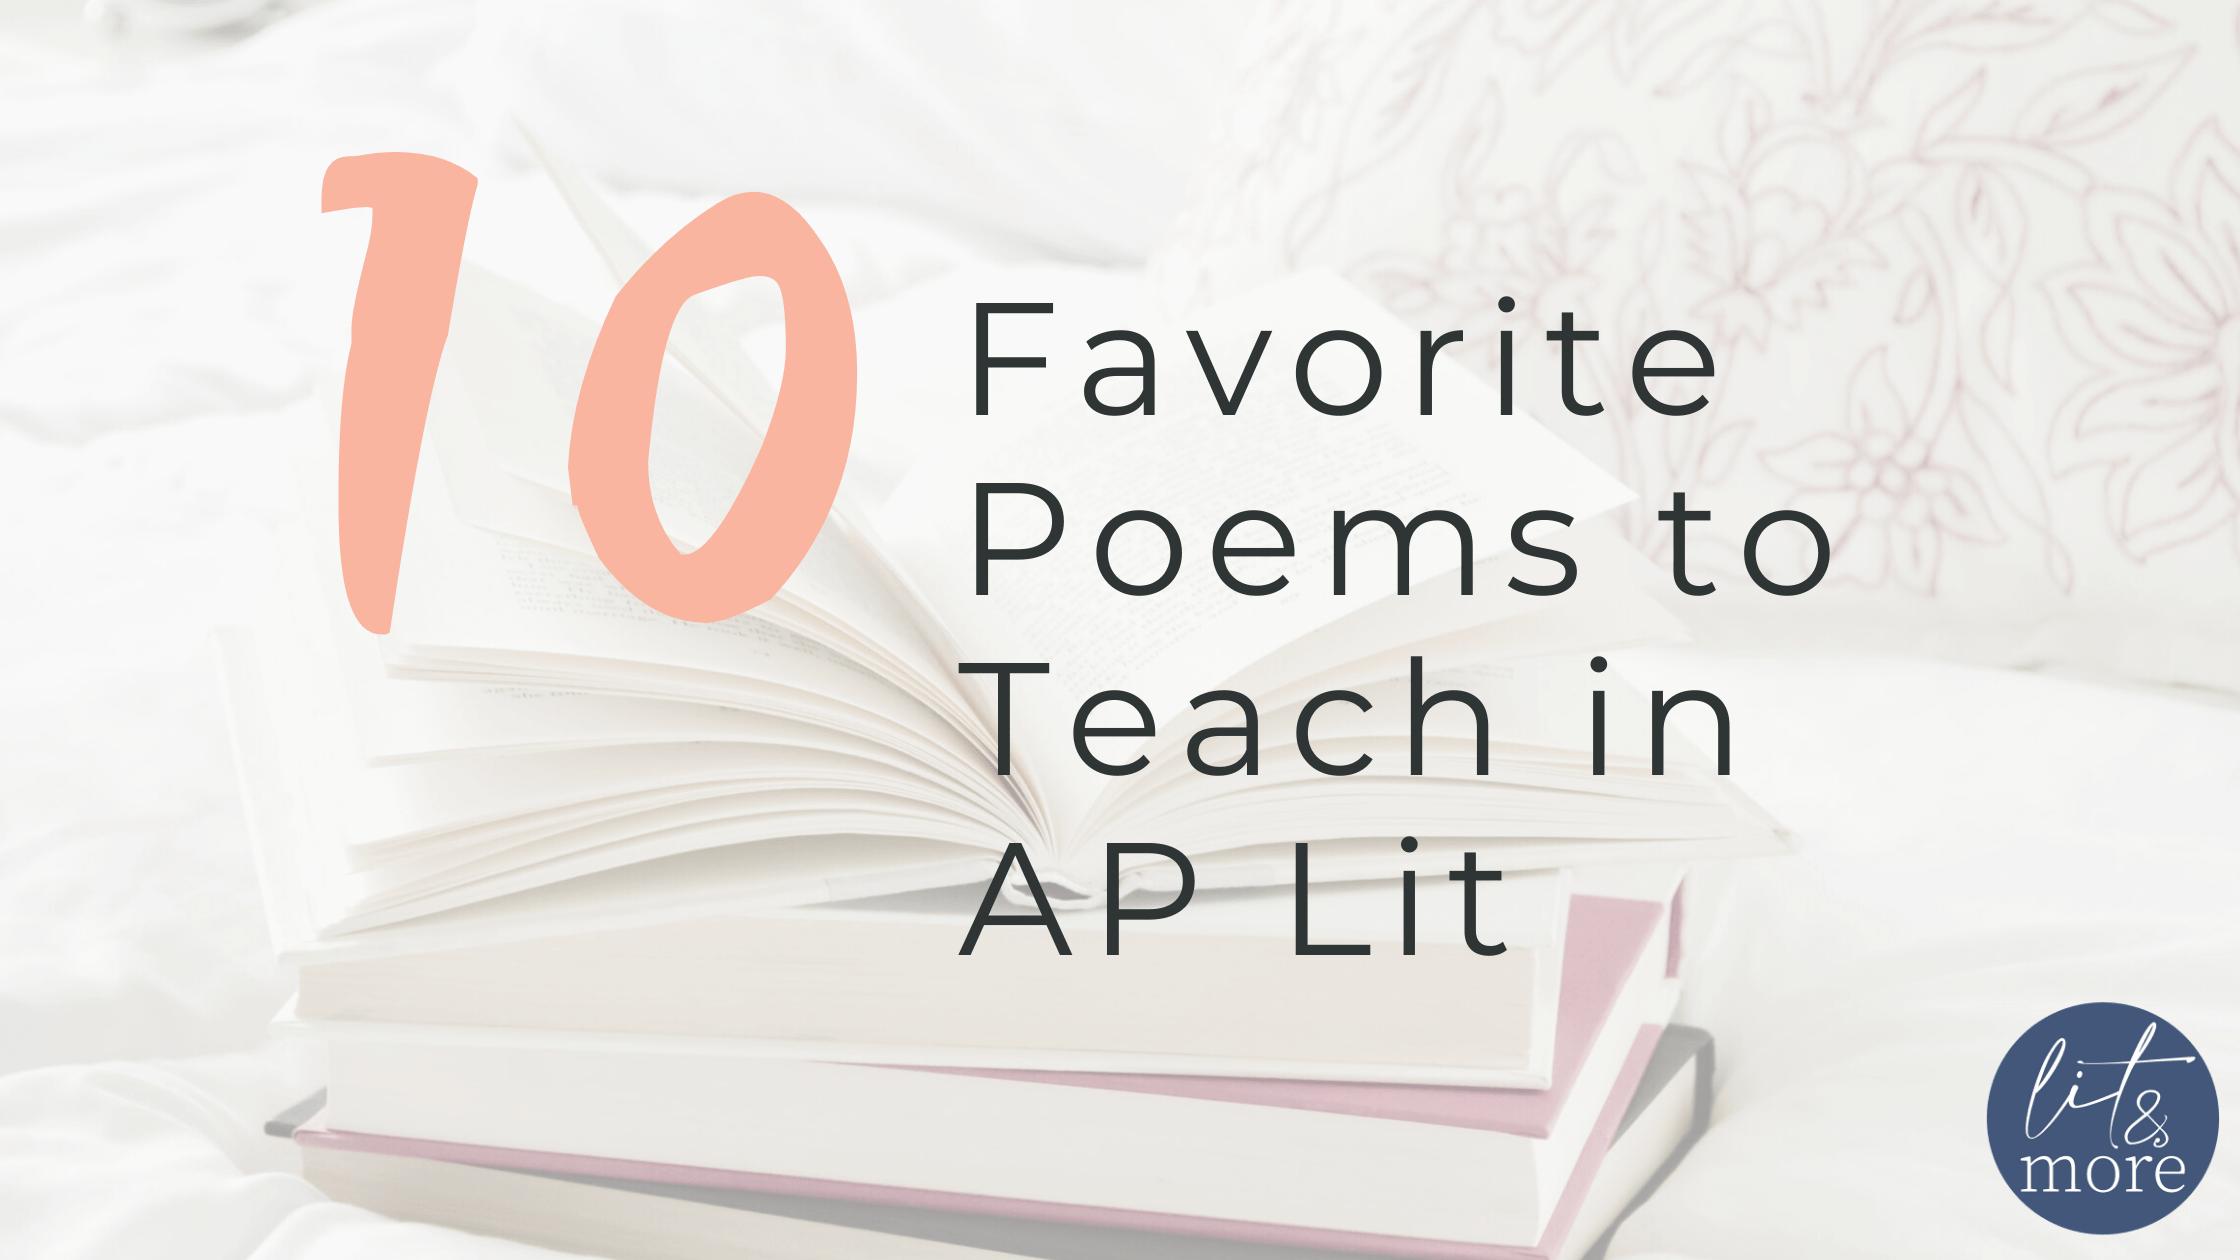 List of favorite poems for AP Lit